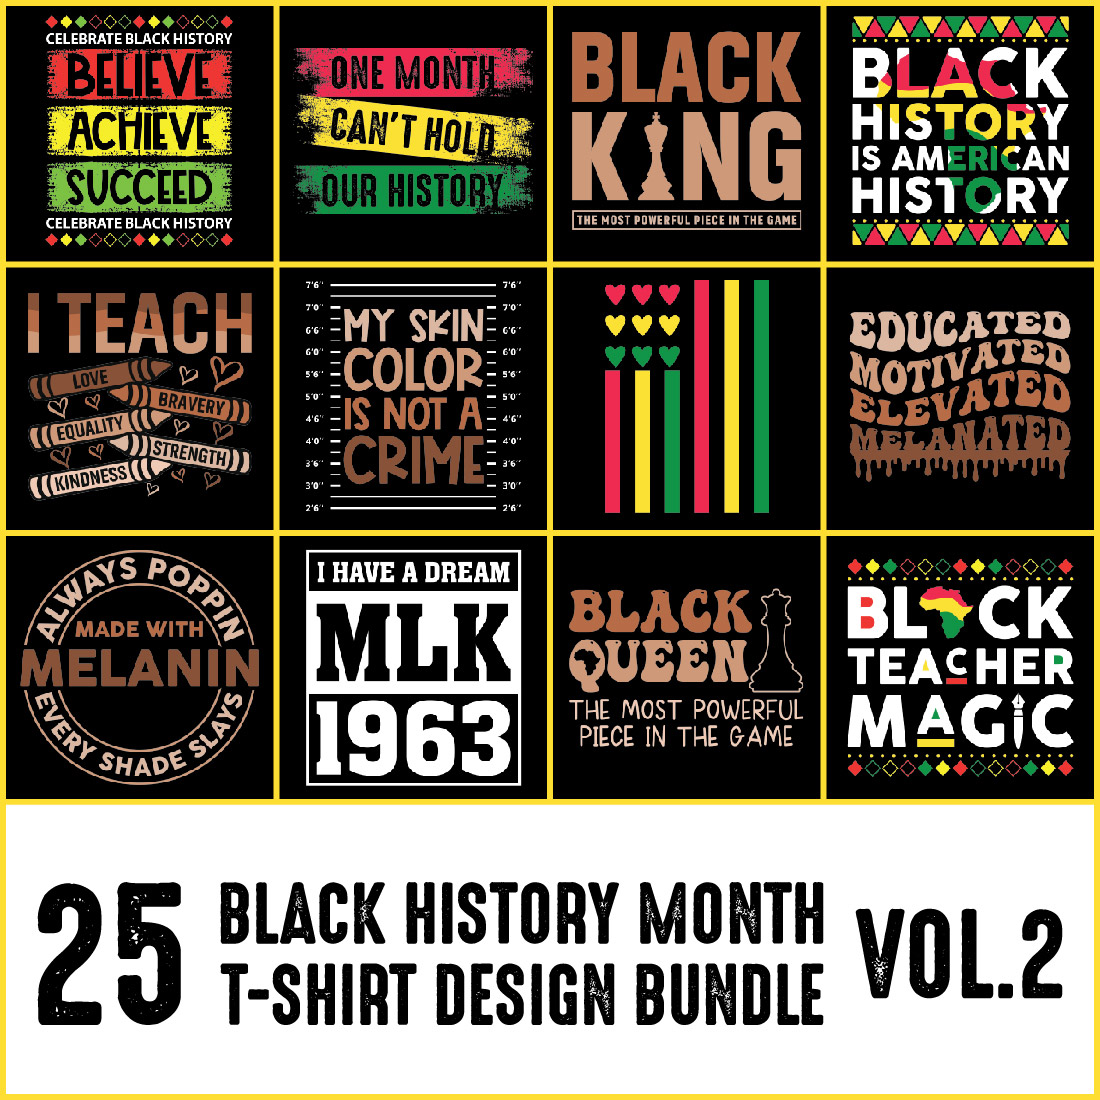 Black History Month T-Shirts Design Bundle cover image.